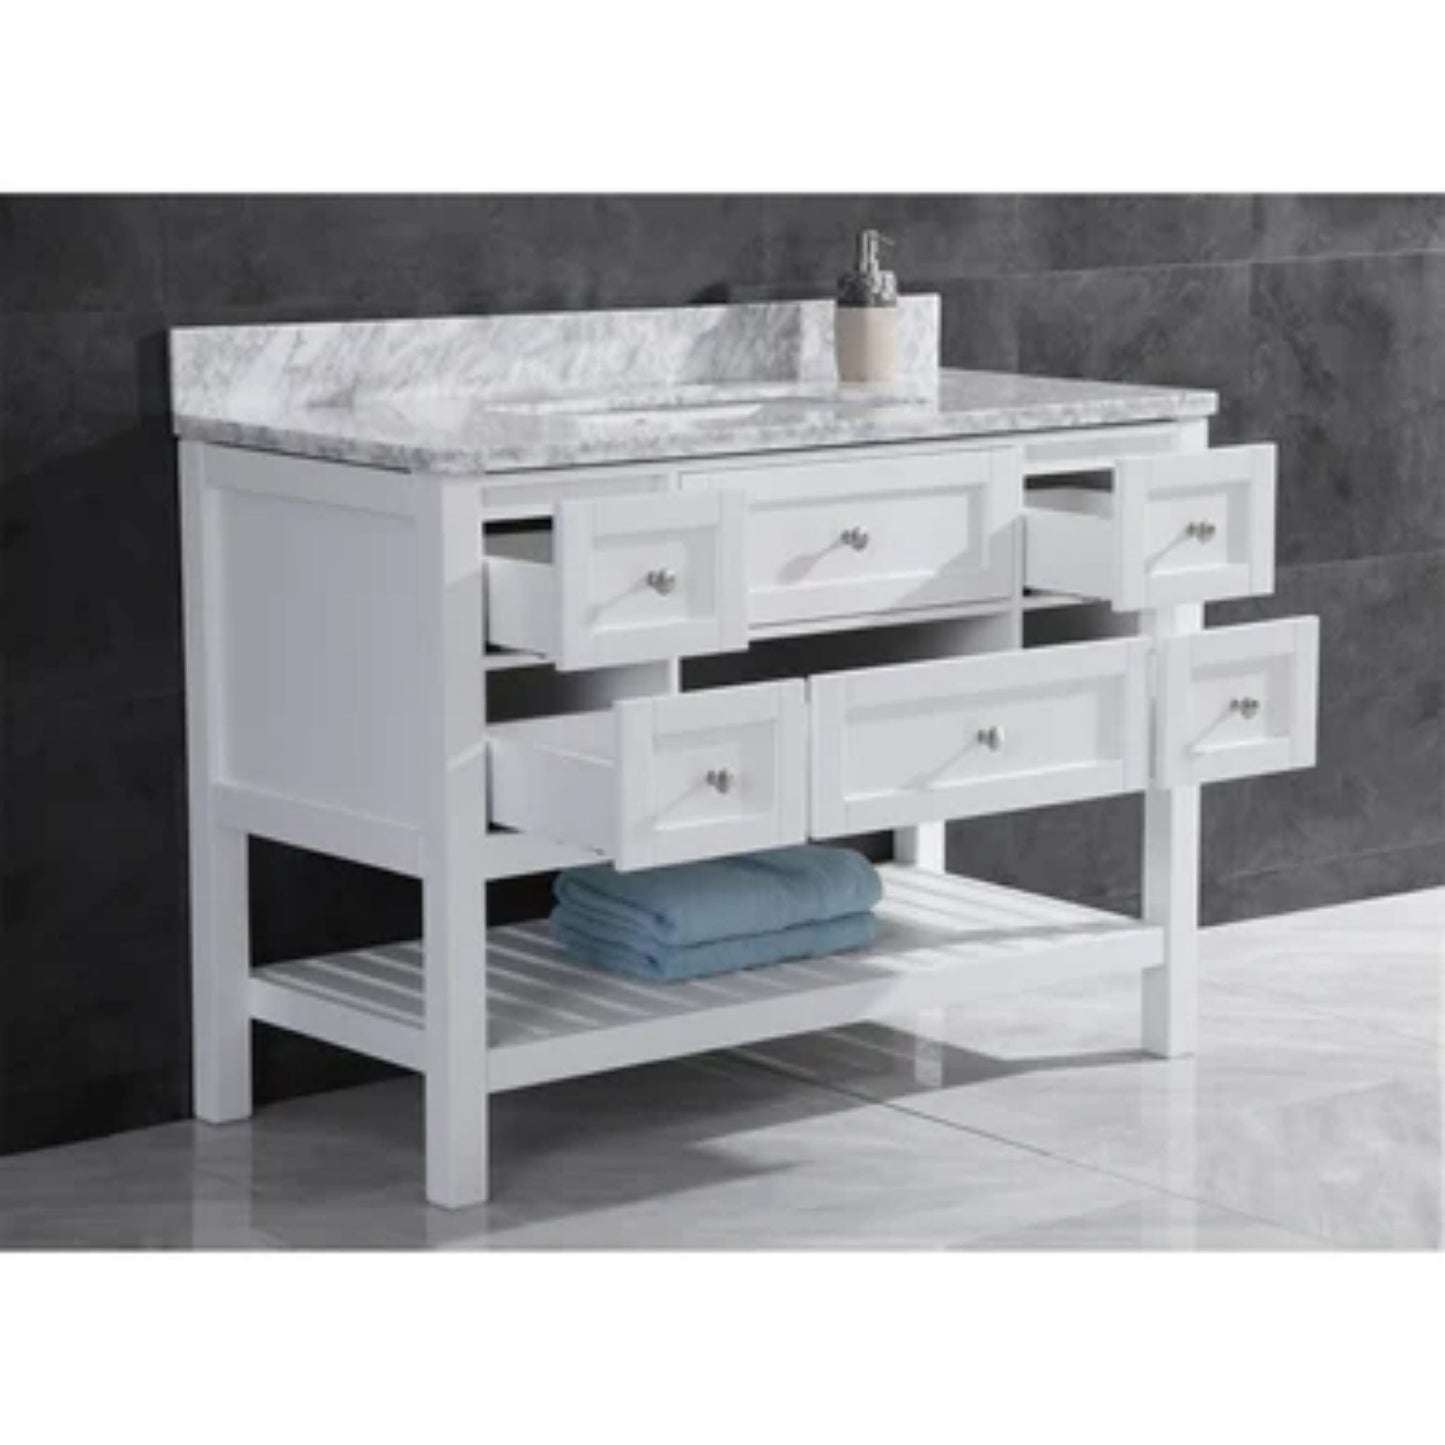 LessCare 41" White Vanity Cabinet Set